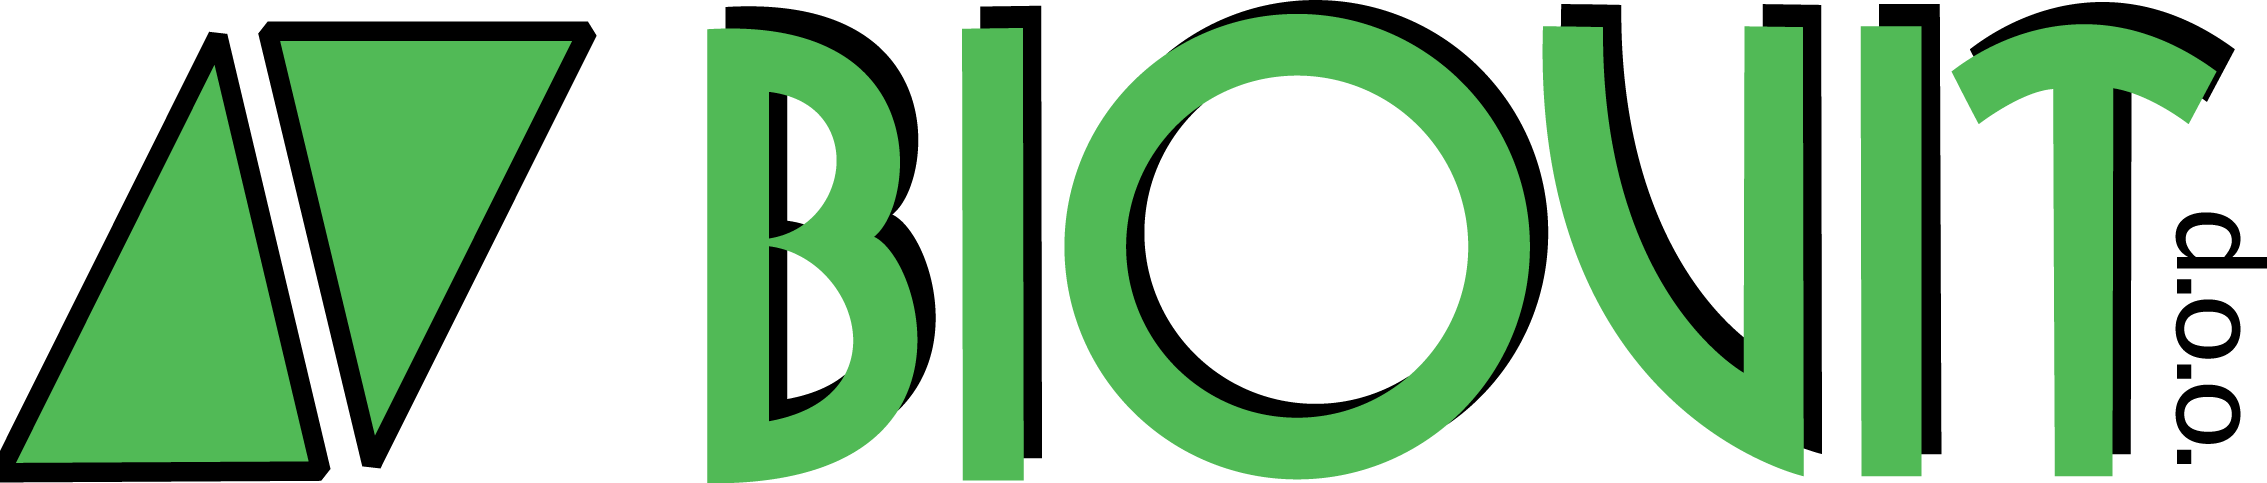 Biovit logo